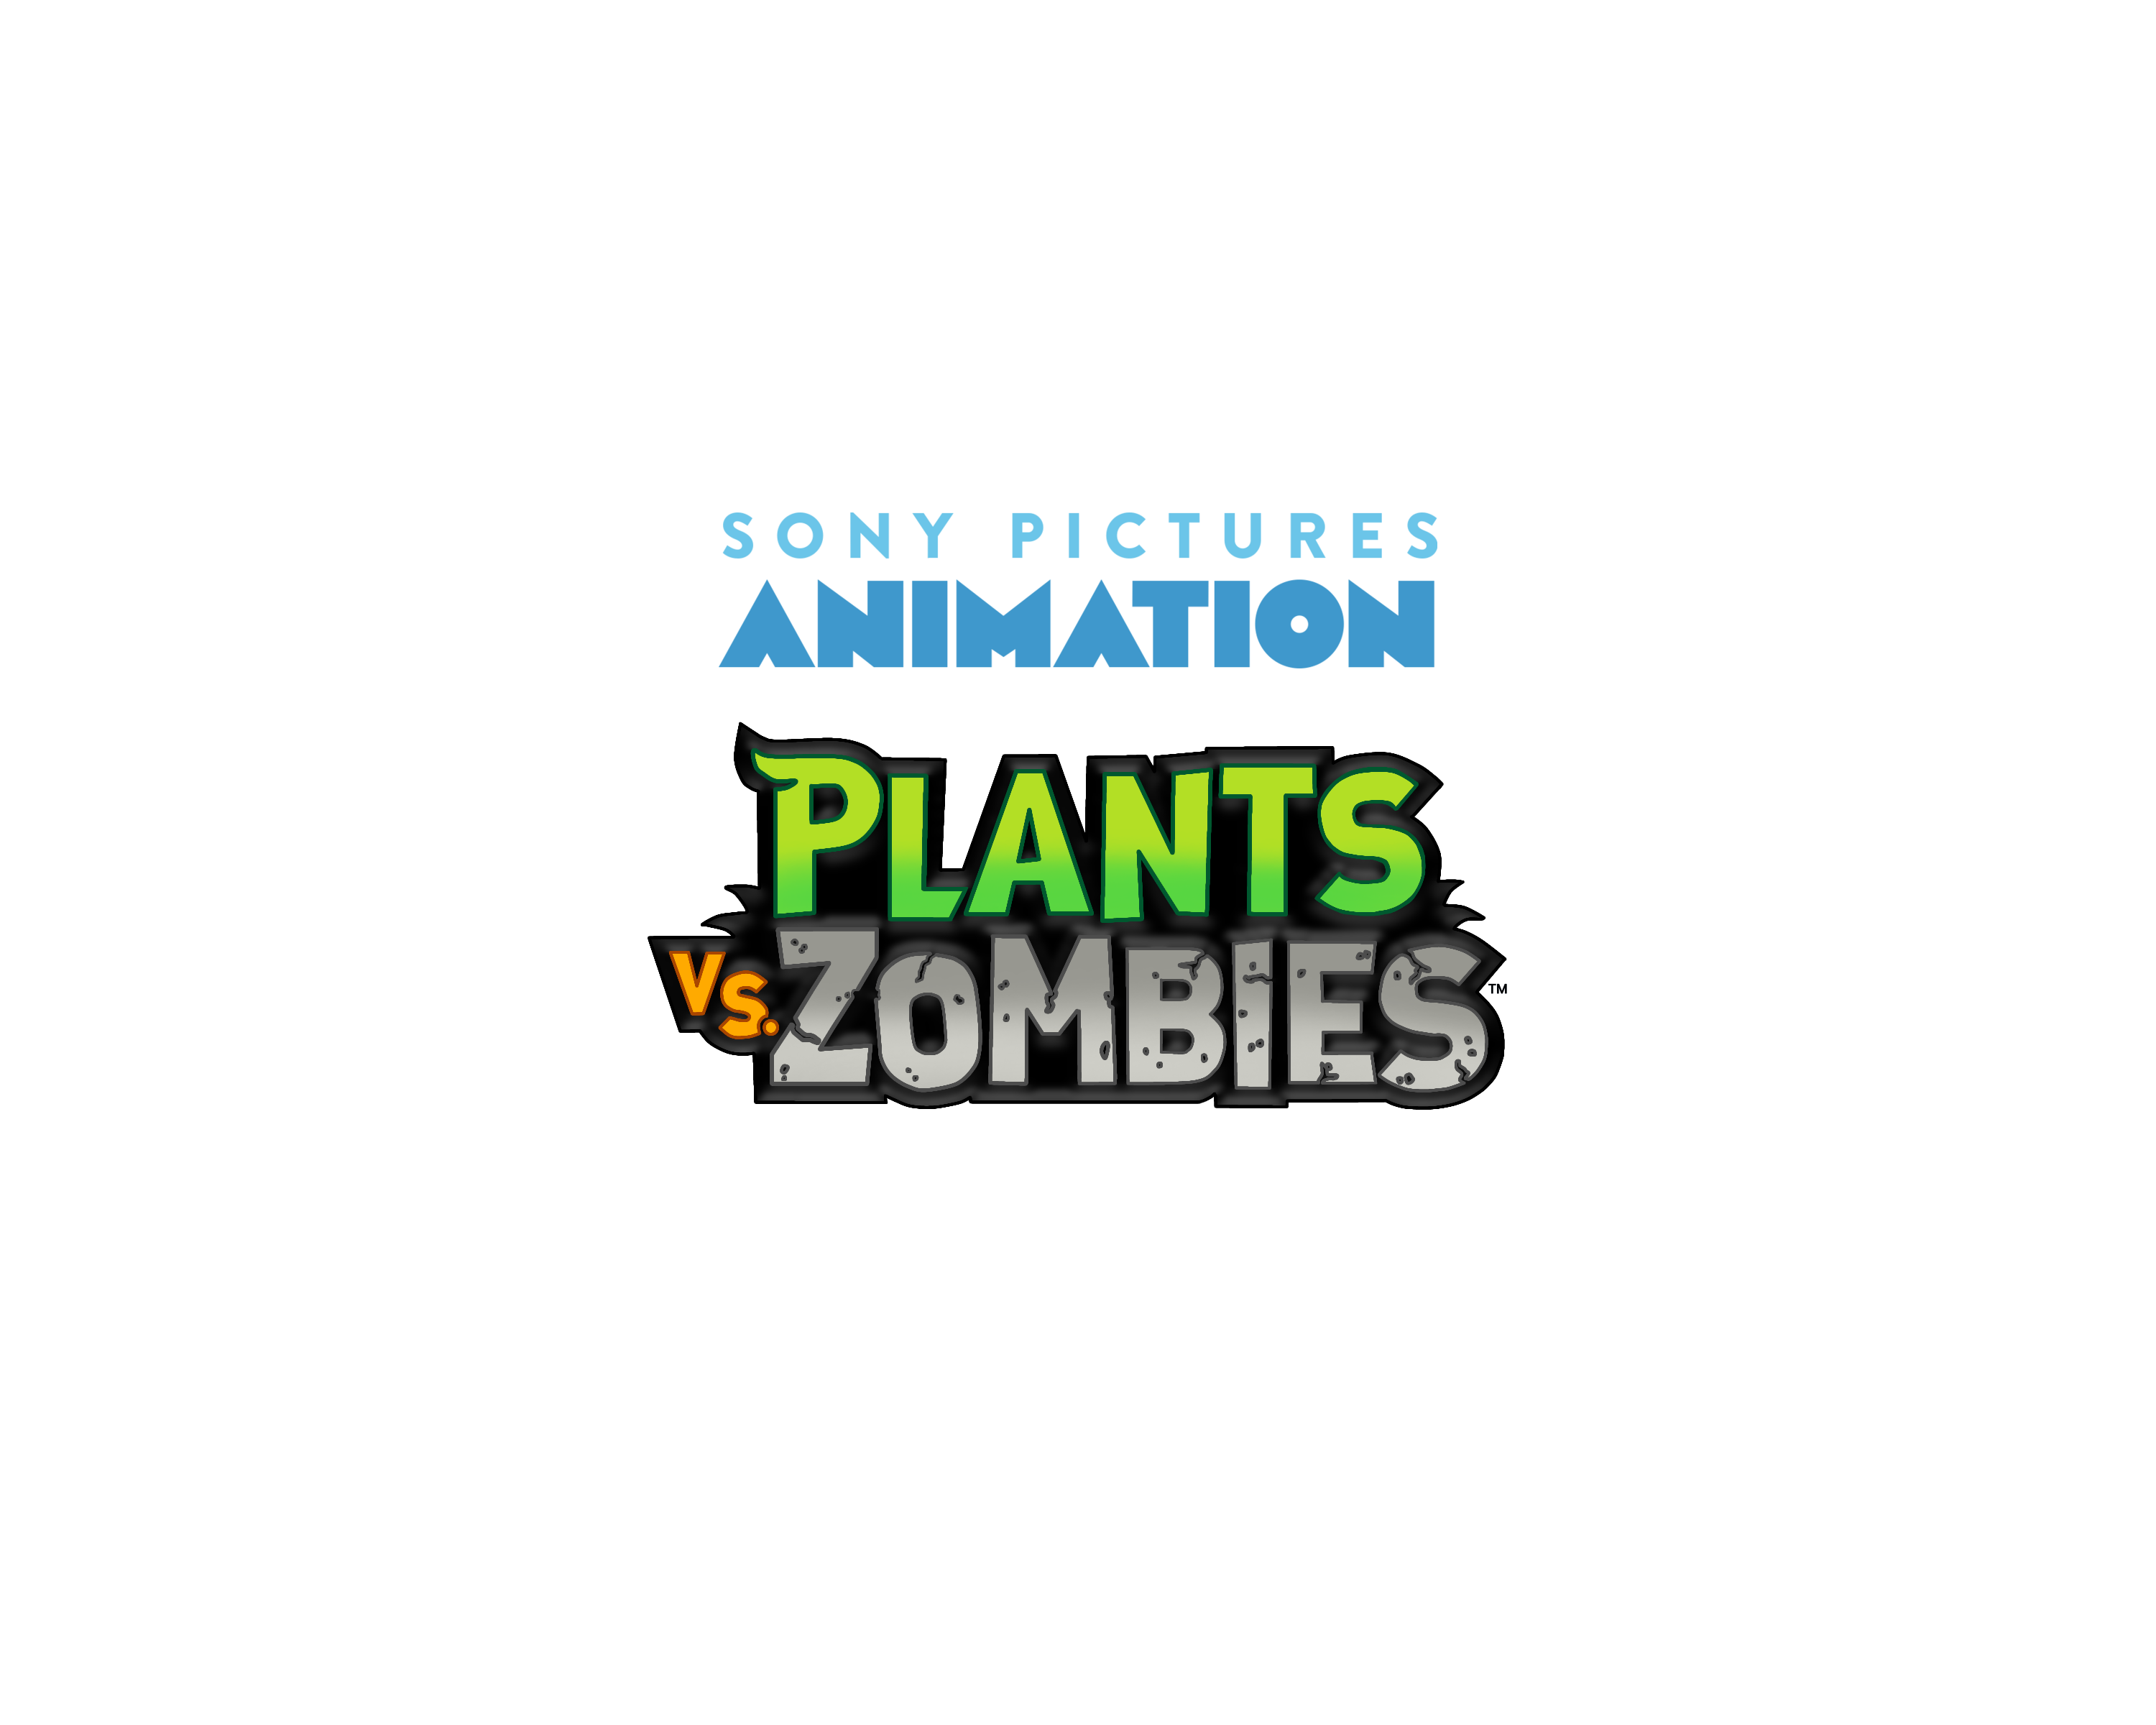 Plants vs. Zombies: The Movie, Movie Fanon Wiki